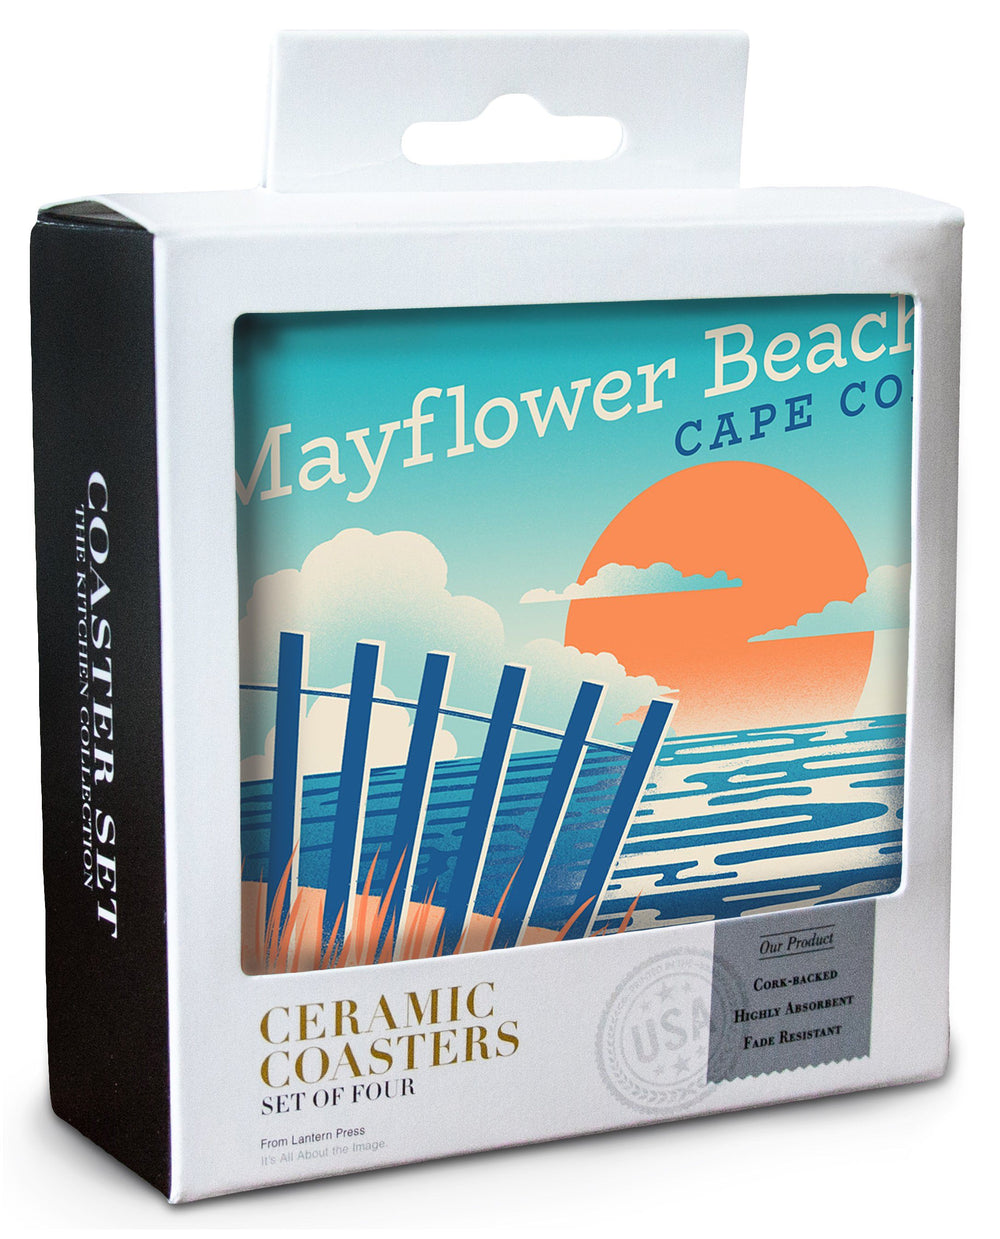 Cape Cod, Massachusetts, Mayflower Beach, Sun-faded Shoreline Collection, Glowing Shore, Beach Scene, Coaster Set Coasters Lantern Press 